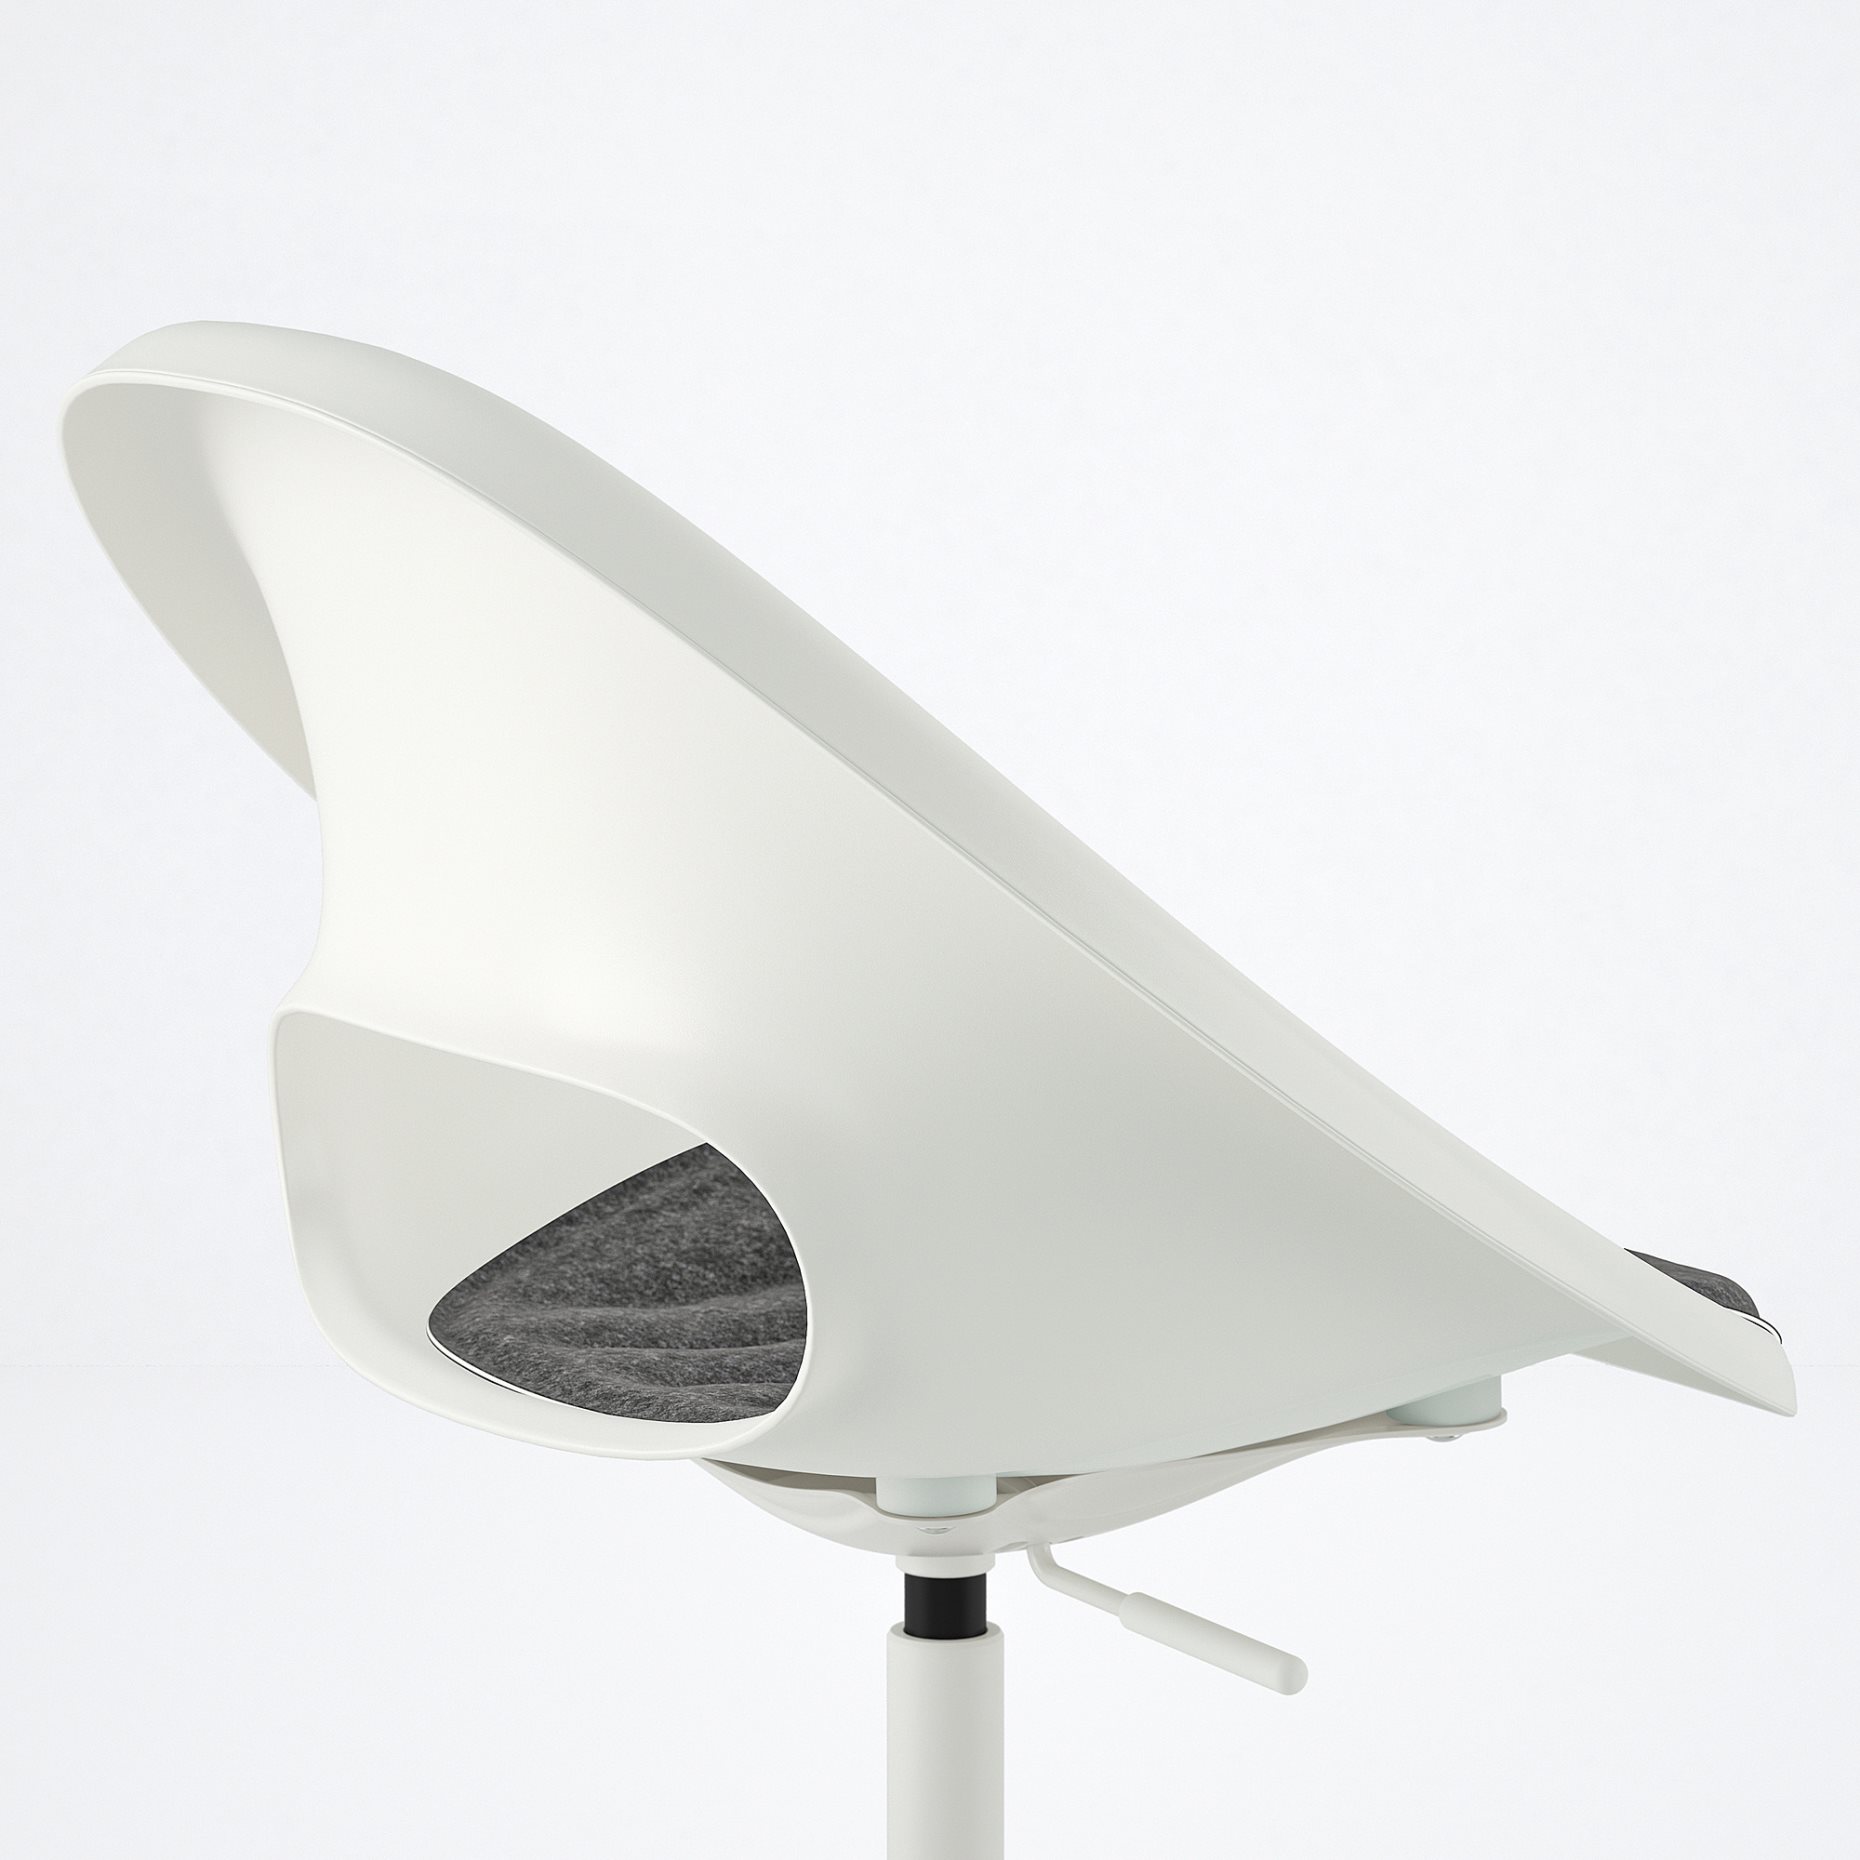 LOBERGET/MALSKAR, swivel chair with pad, 994.454.51